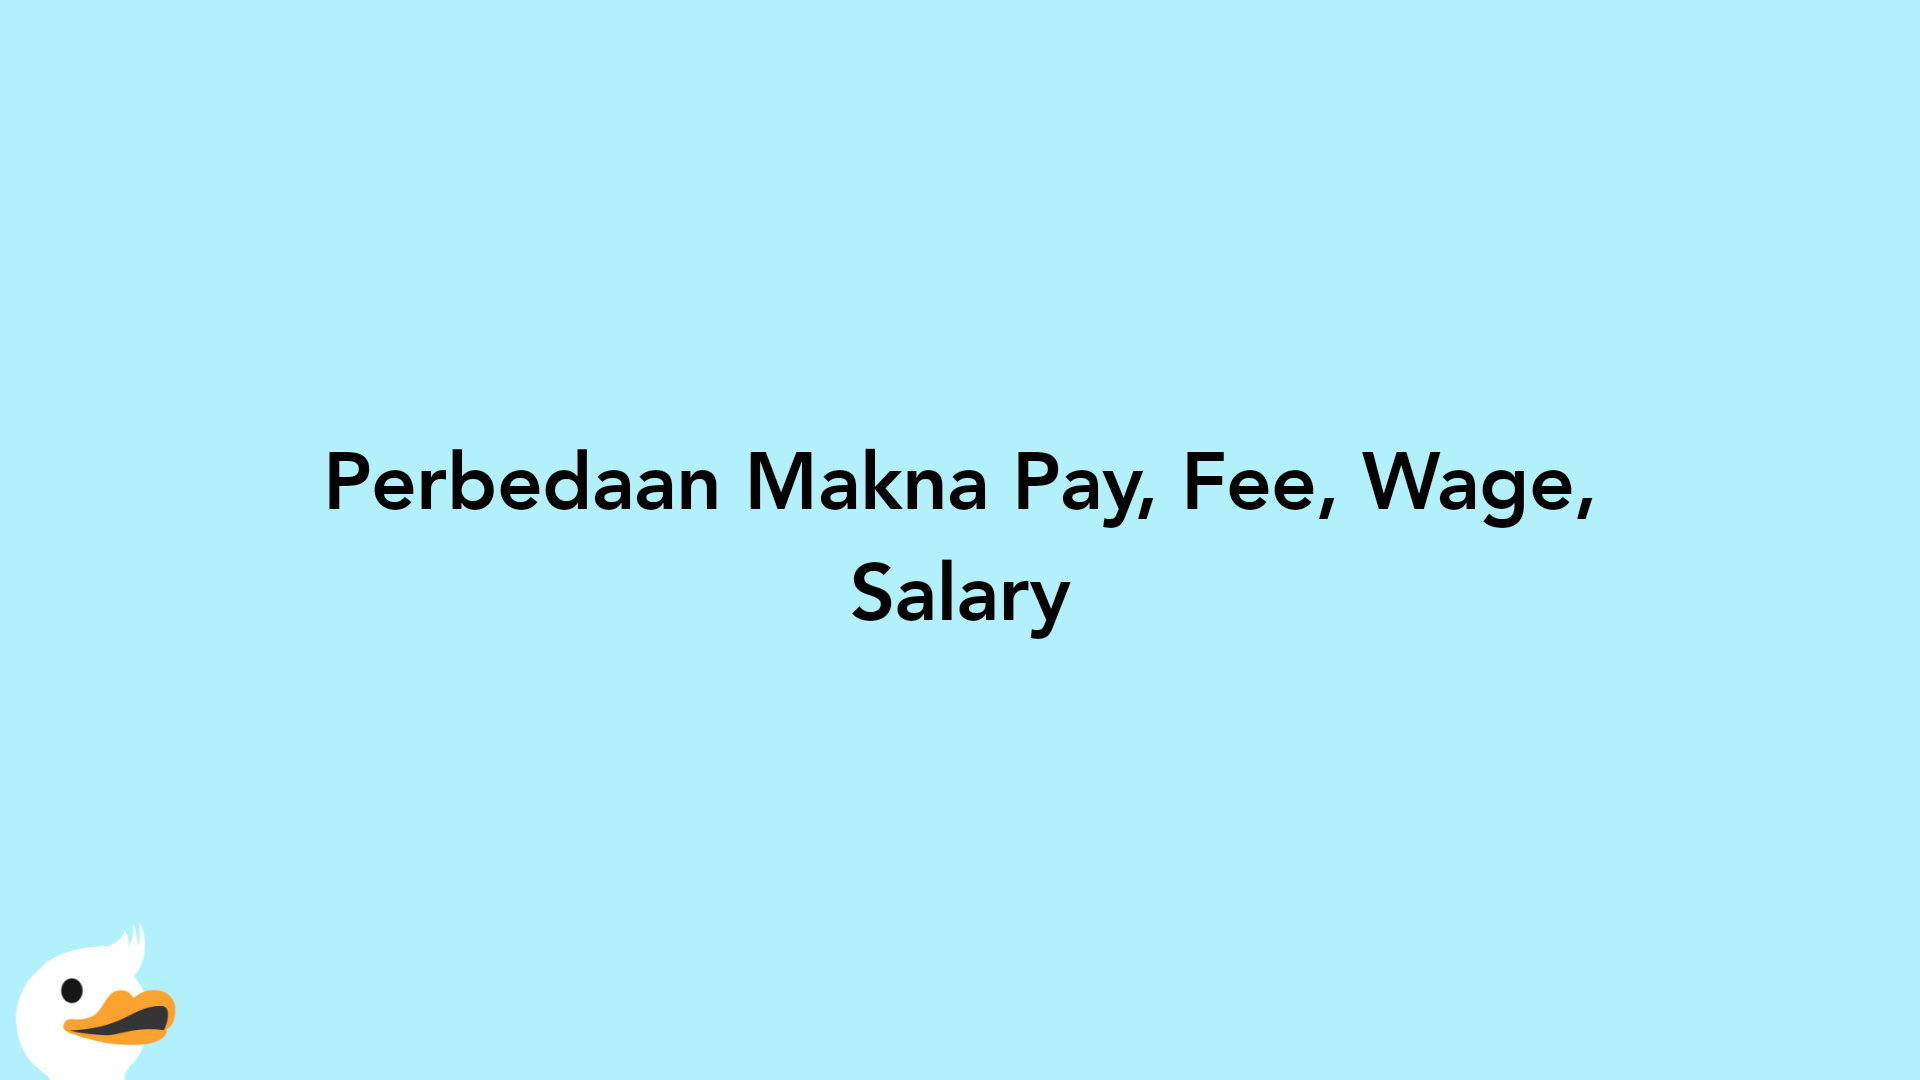 Perbedaan Makna Pay, Fee, Wage, Salary